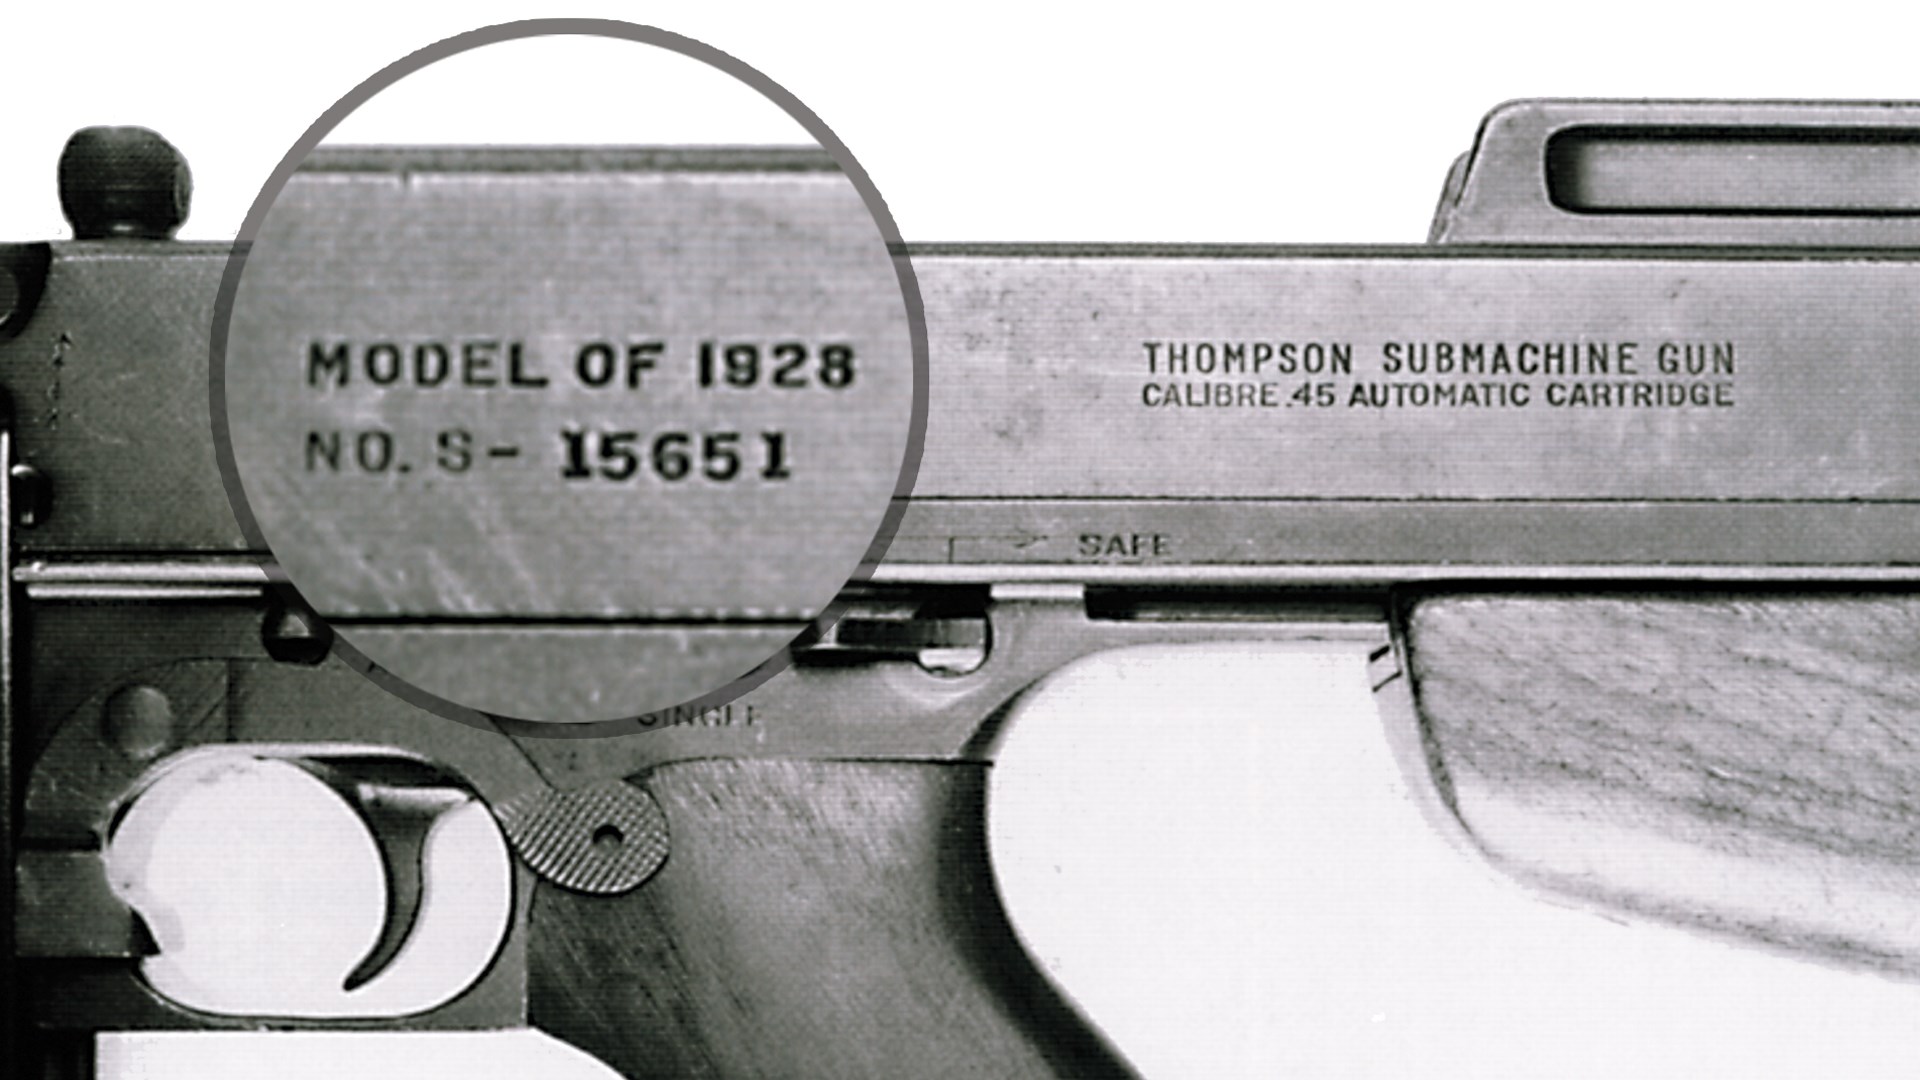 Model of 1928 Thompson Submachine Gun calibre .45 Automatic Cartridge